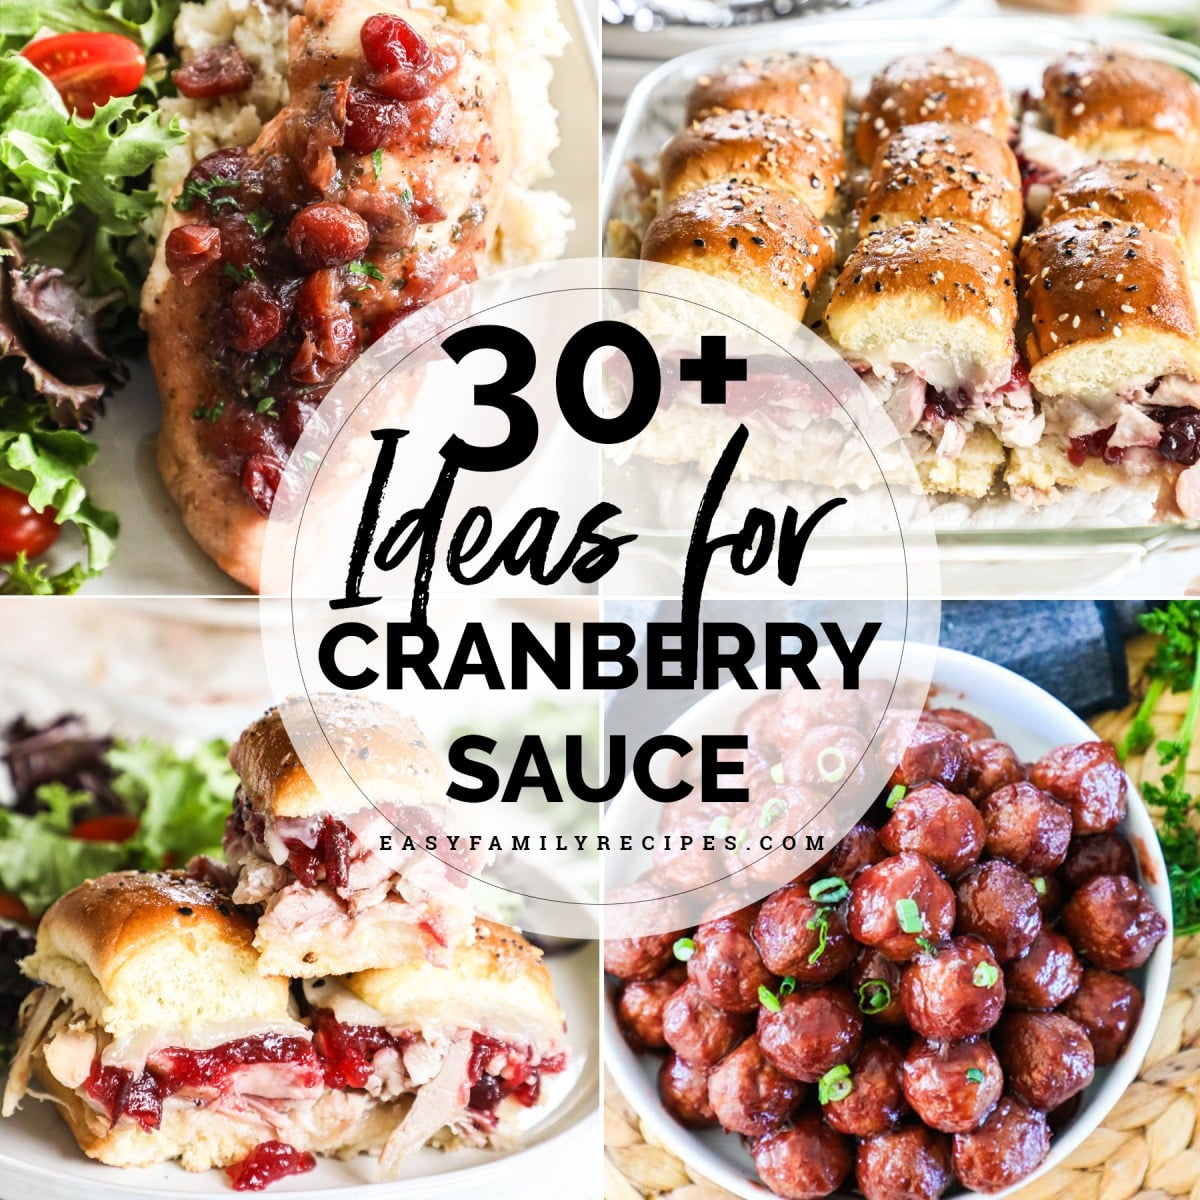 30+ Leftover Cranberry Sauce Recipes